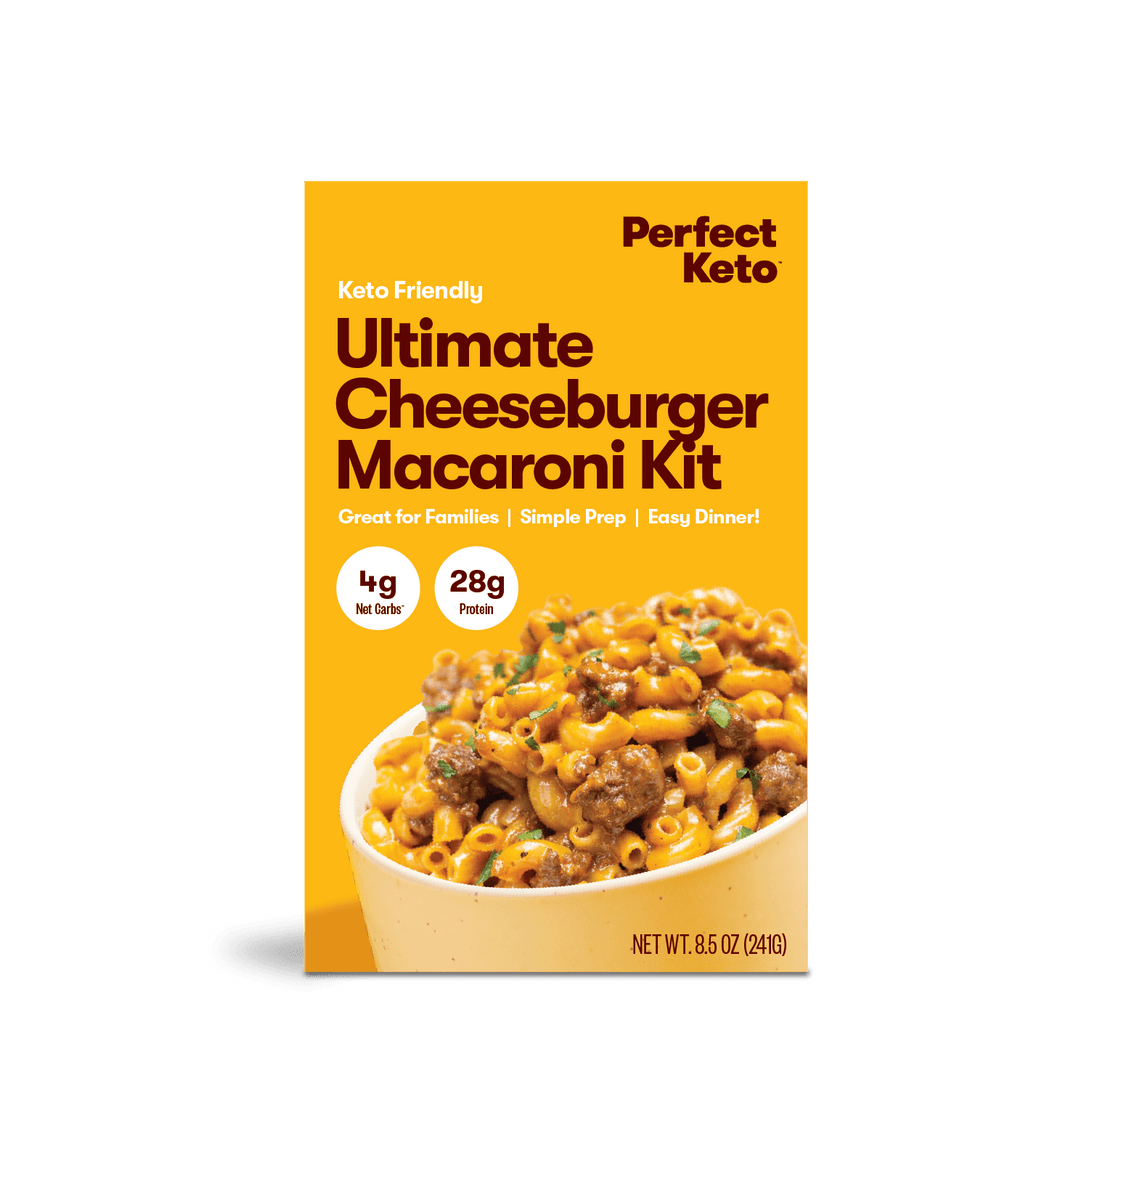 Perfect Keto x Ultimate Cheeseburger Macaroni Kit